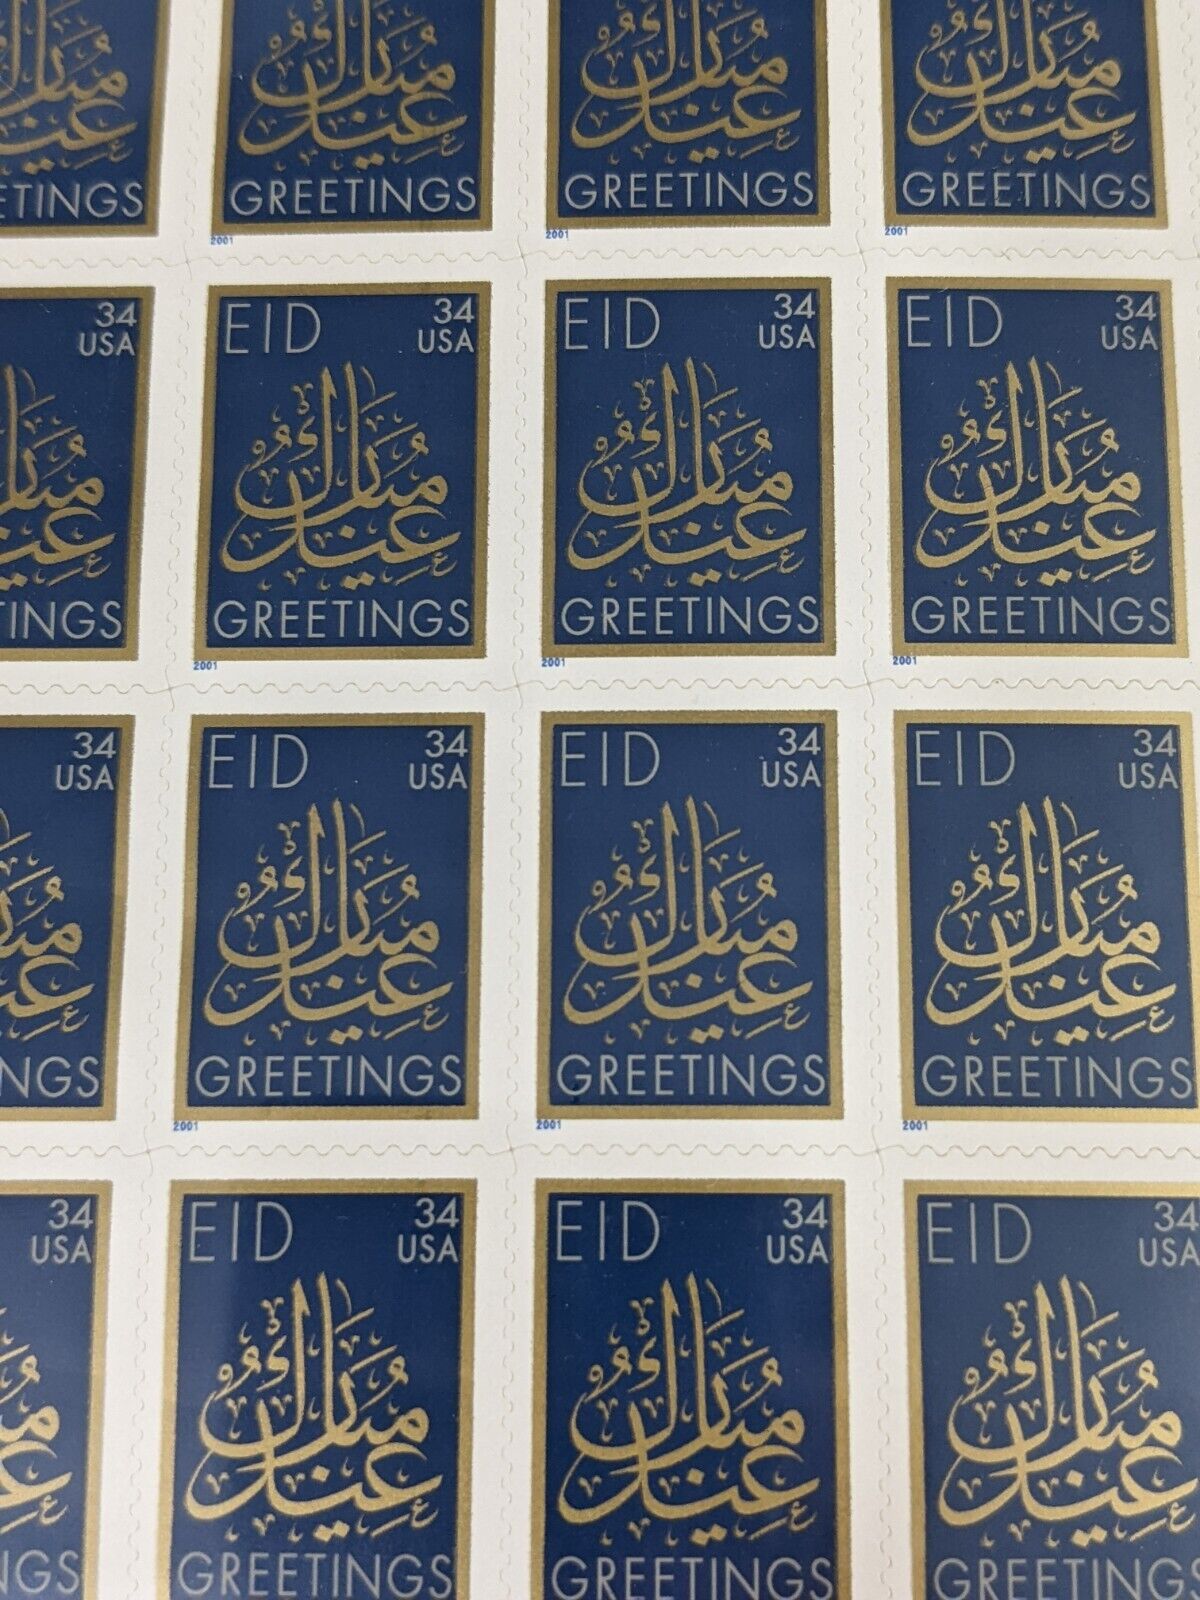 United States Postal Service USPS Postage Stamps EID Greetings Self Adhesive